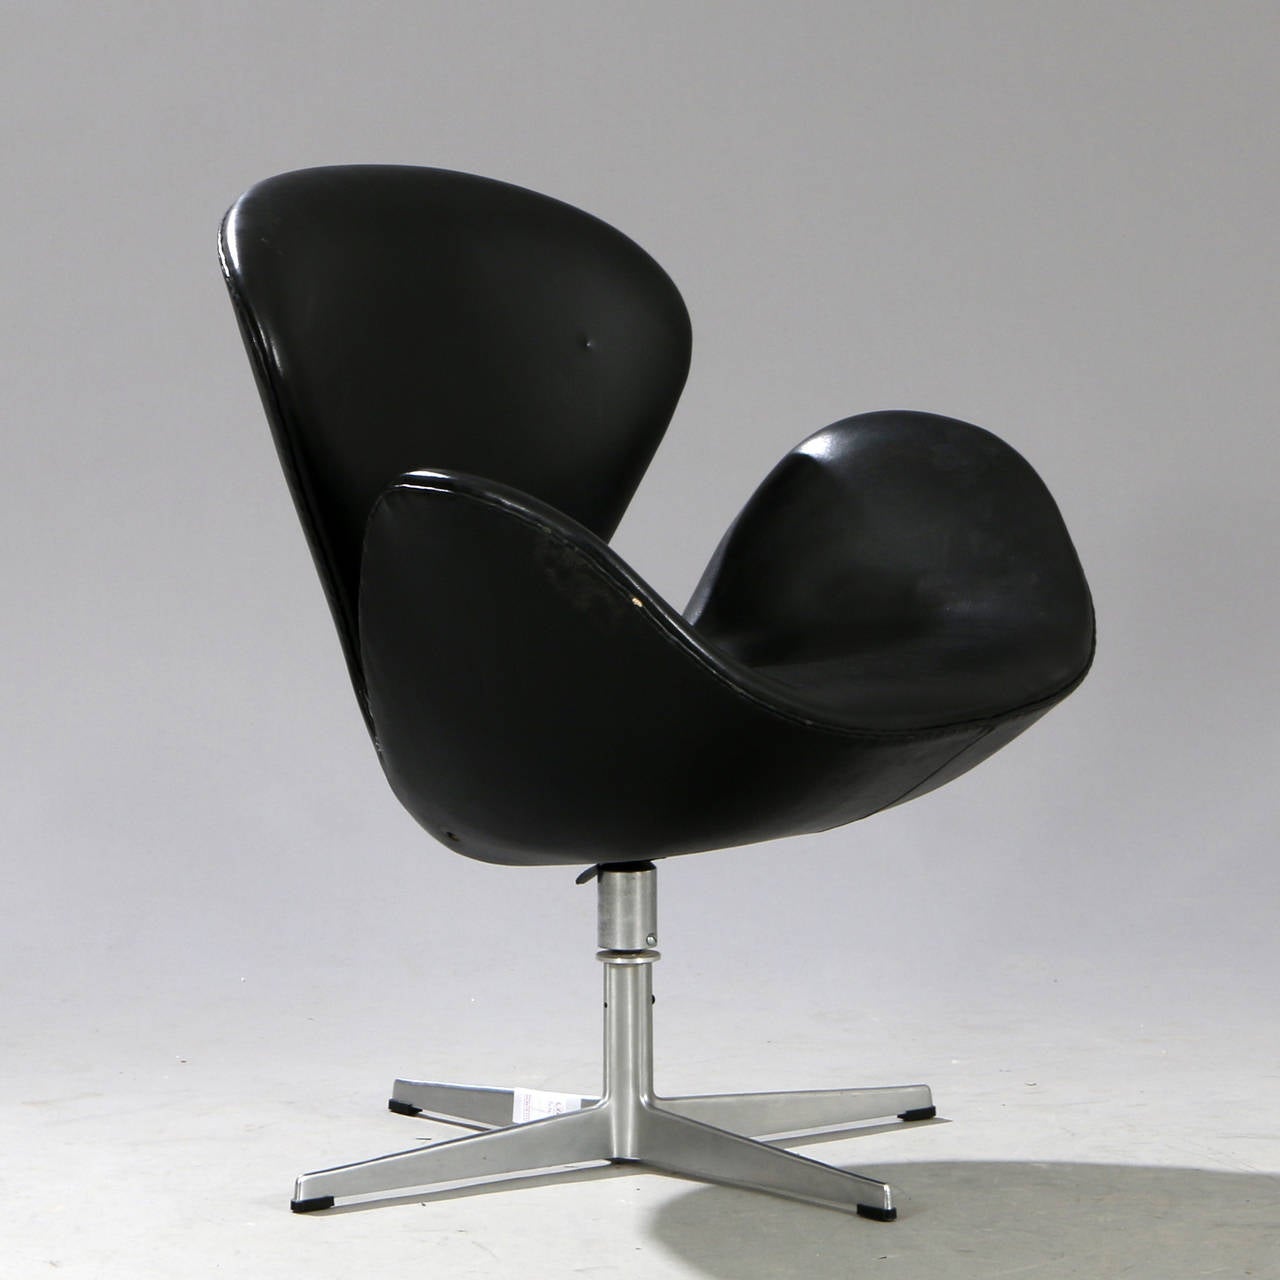 Arne Jacobsen The Swan. Easy chair with profiled swivel frame and aluminum base. swivel and tilt. Upholstered with black vinyl.